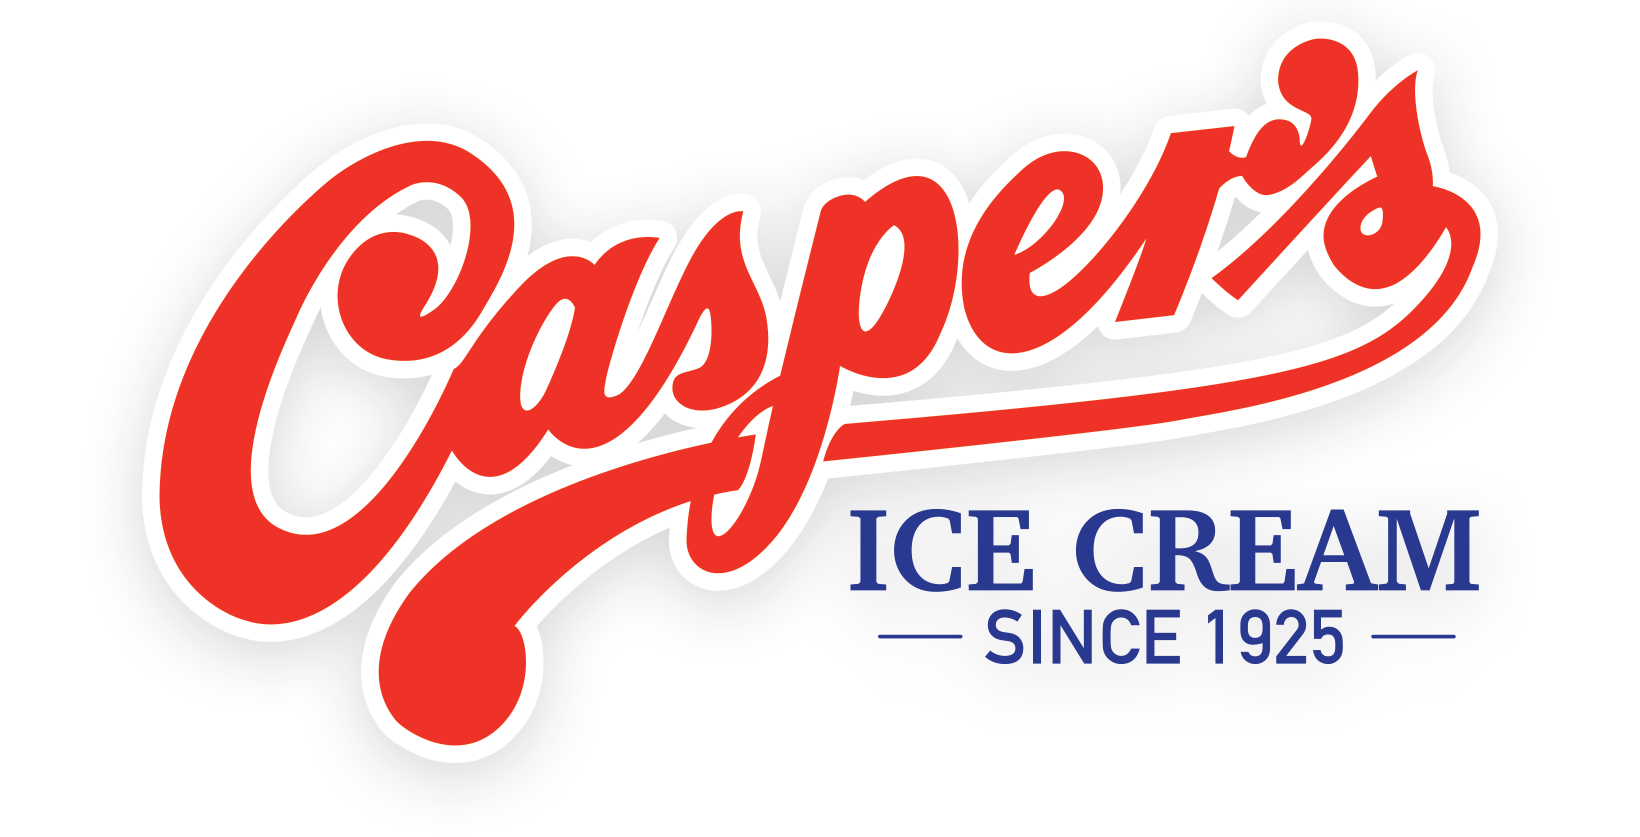 Casper's